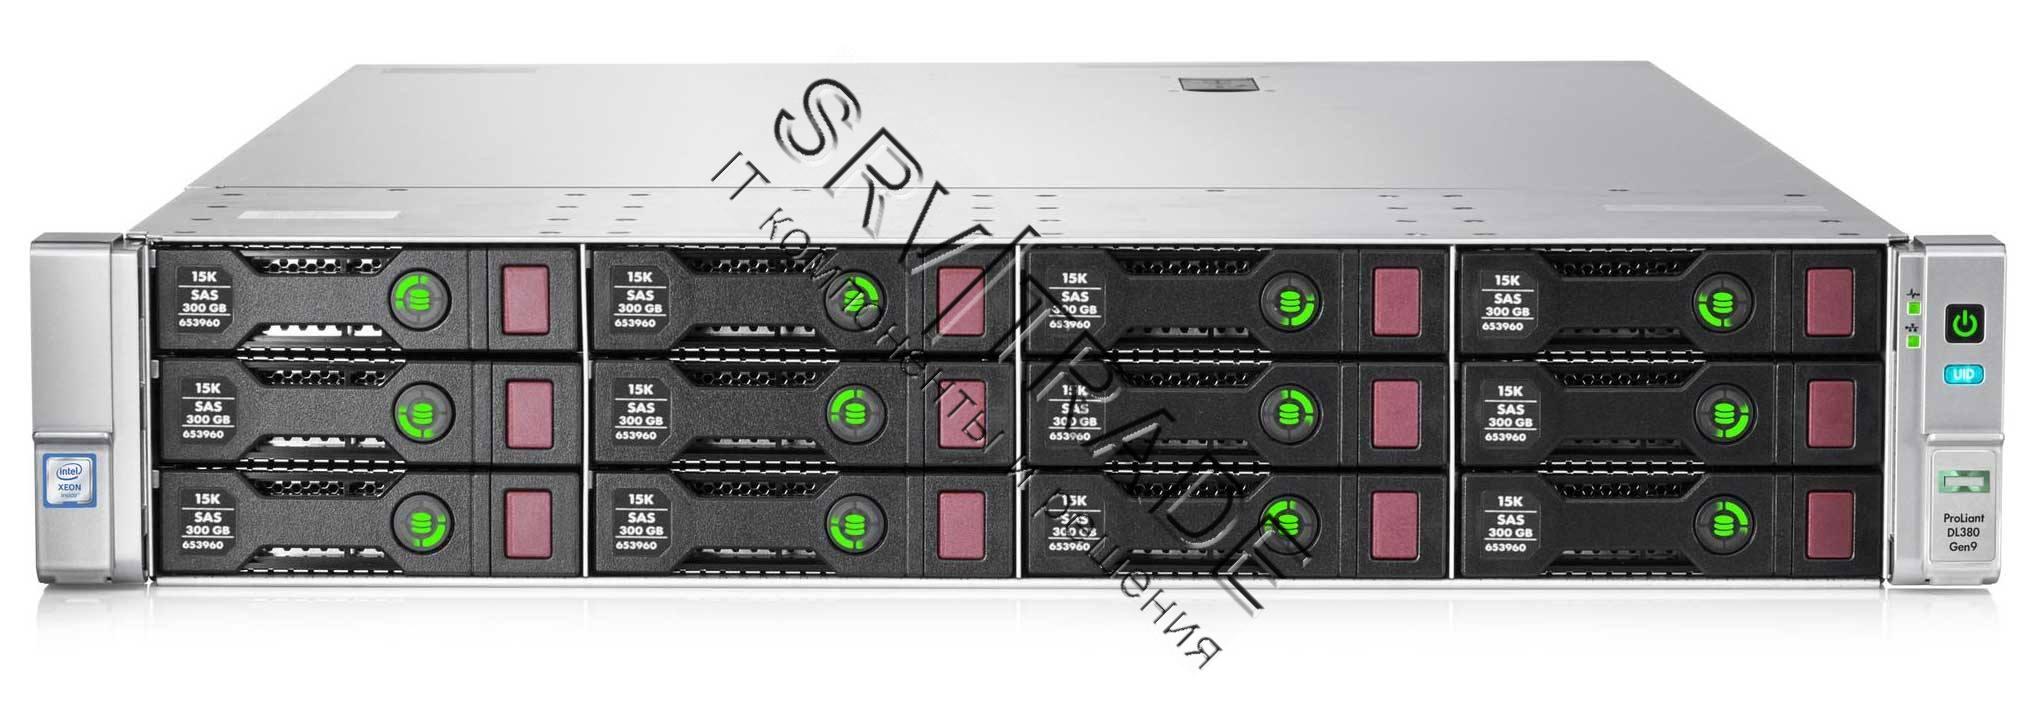 Сервер Proliant DL380 HPM Gen9 E5-2690v3 Rack(2U)/803861-B21